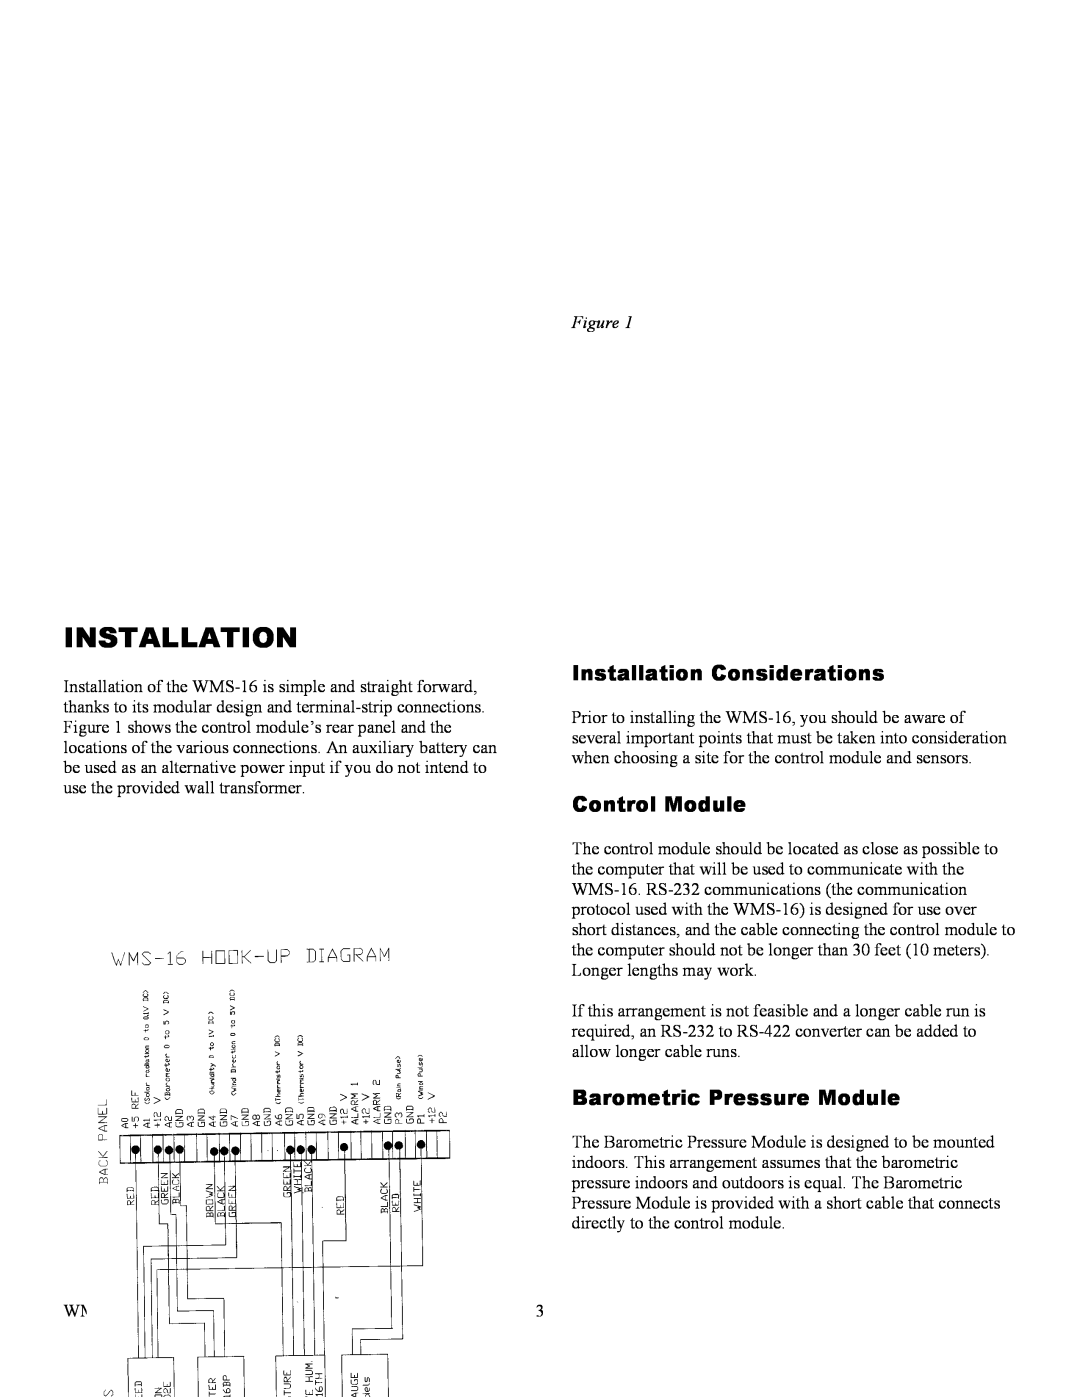 Omega WMS-16 manual Installation Considerations, Control Module, Barometric Pressure Module 